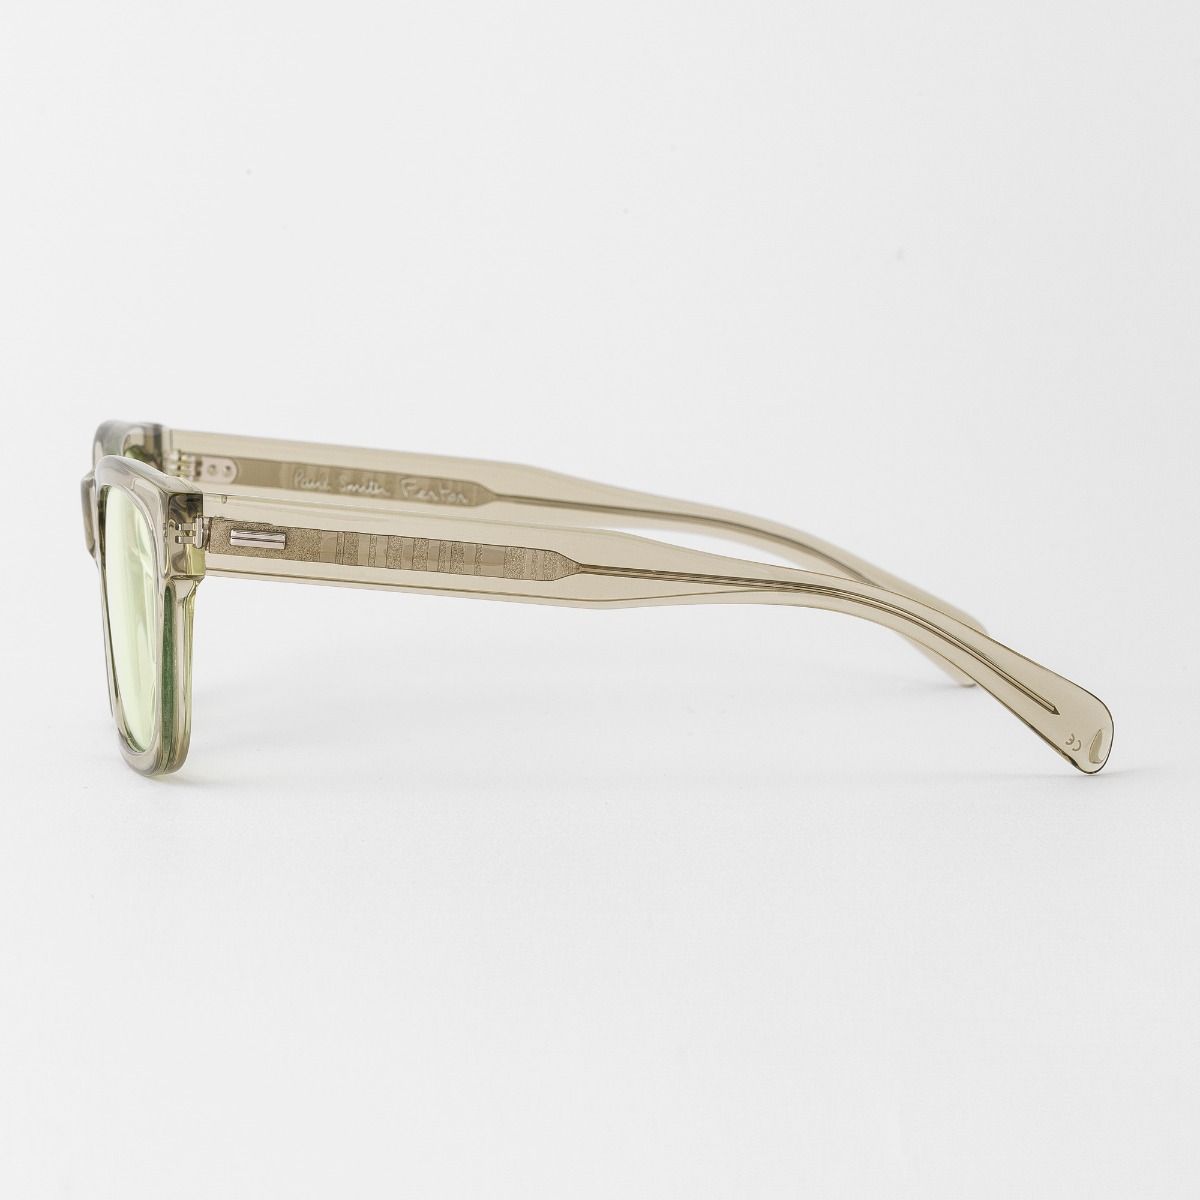 Paul Smith Fenton Limited Edition Square Sunglasses